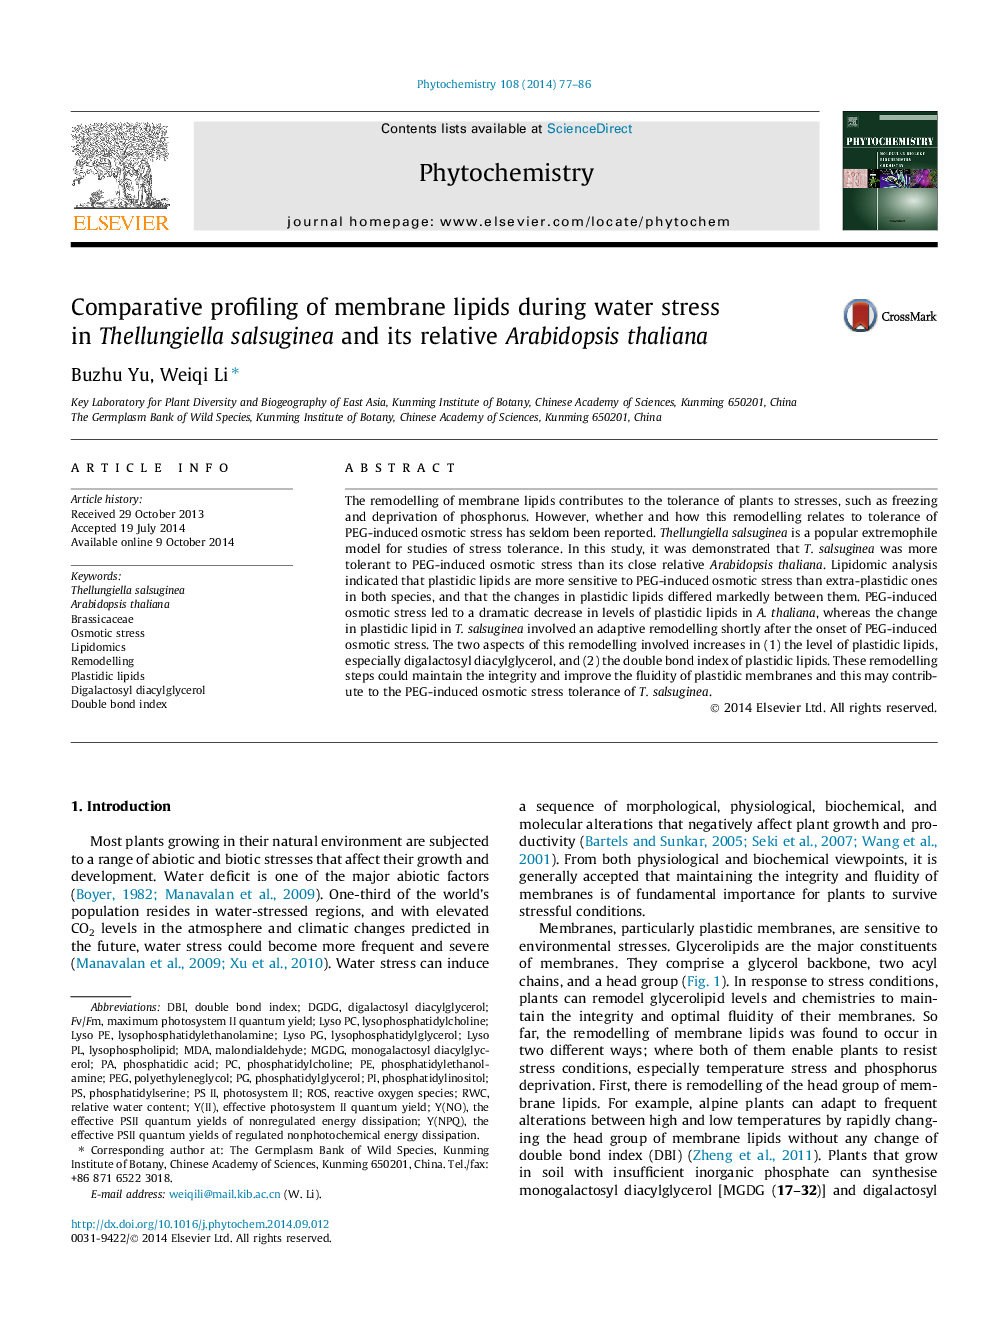 Comparative profiling of membrane lipids during water stress in Thellungiella salsuginea and its relative Arabidopsis thaliana